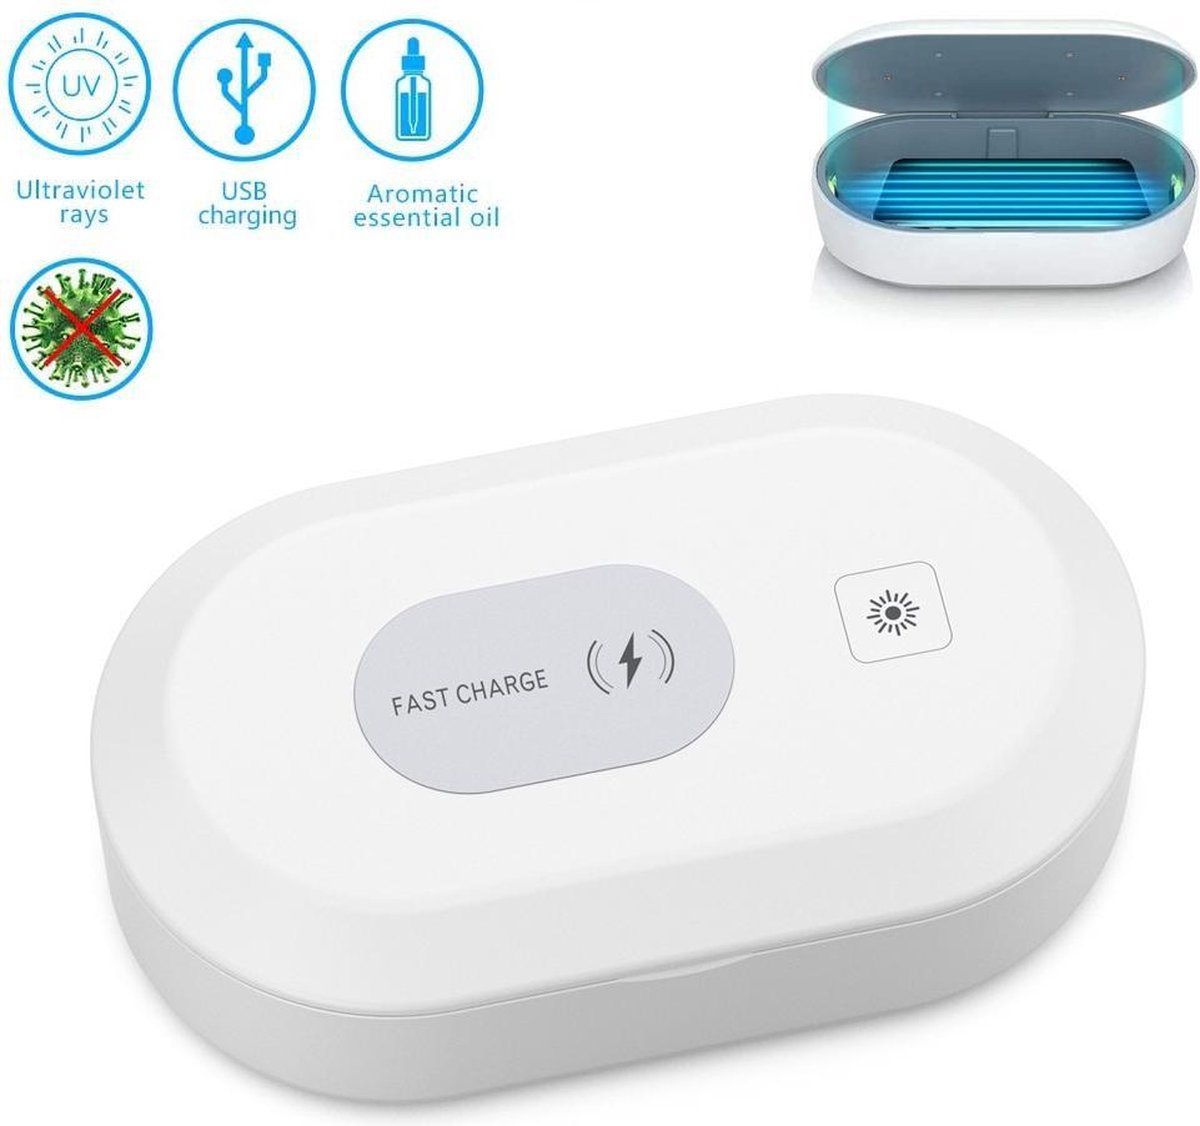 CASEME UV Box Smartphone Cleaner Wireless Charger (white)